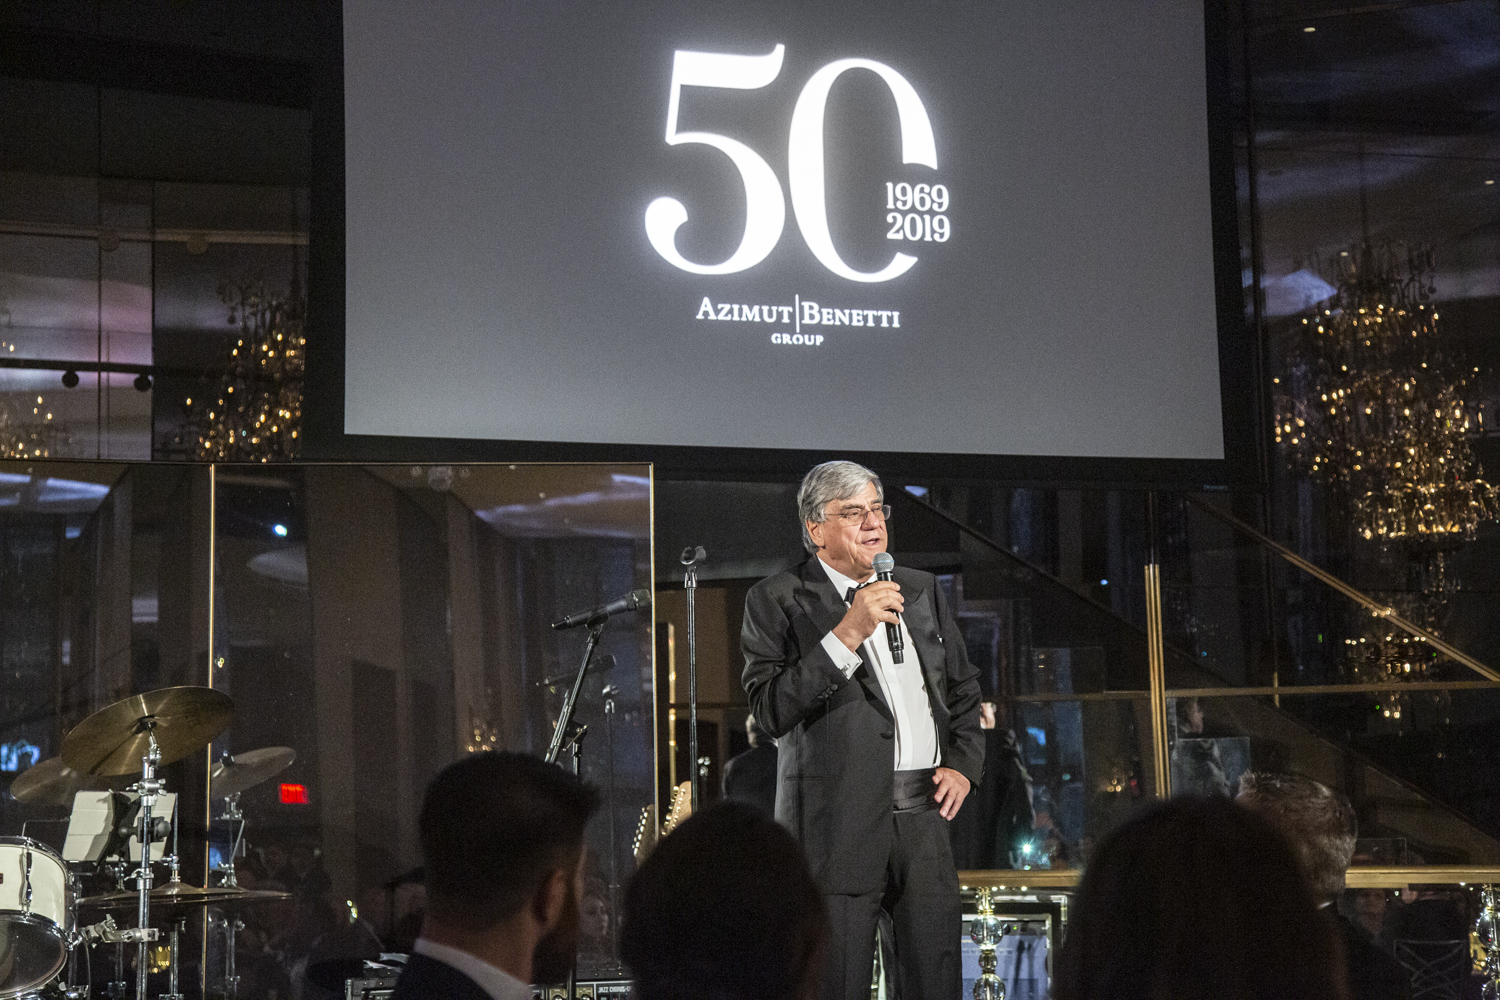 50° anniversary Paolo Vitelli.jpg